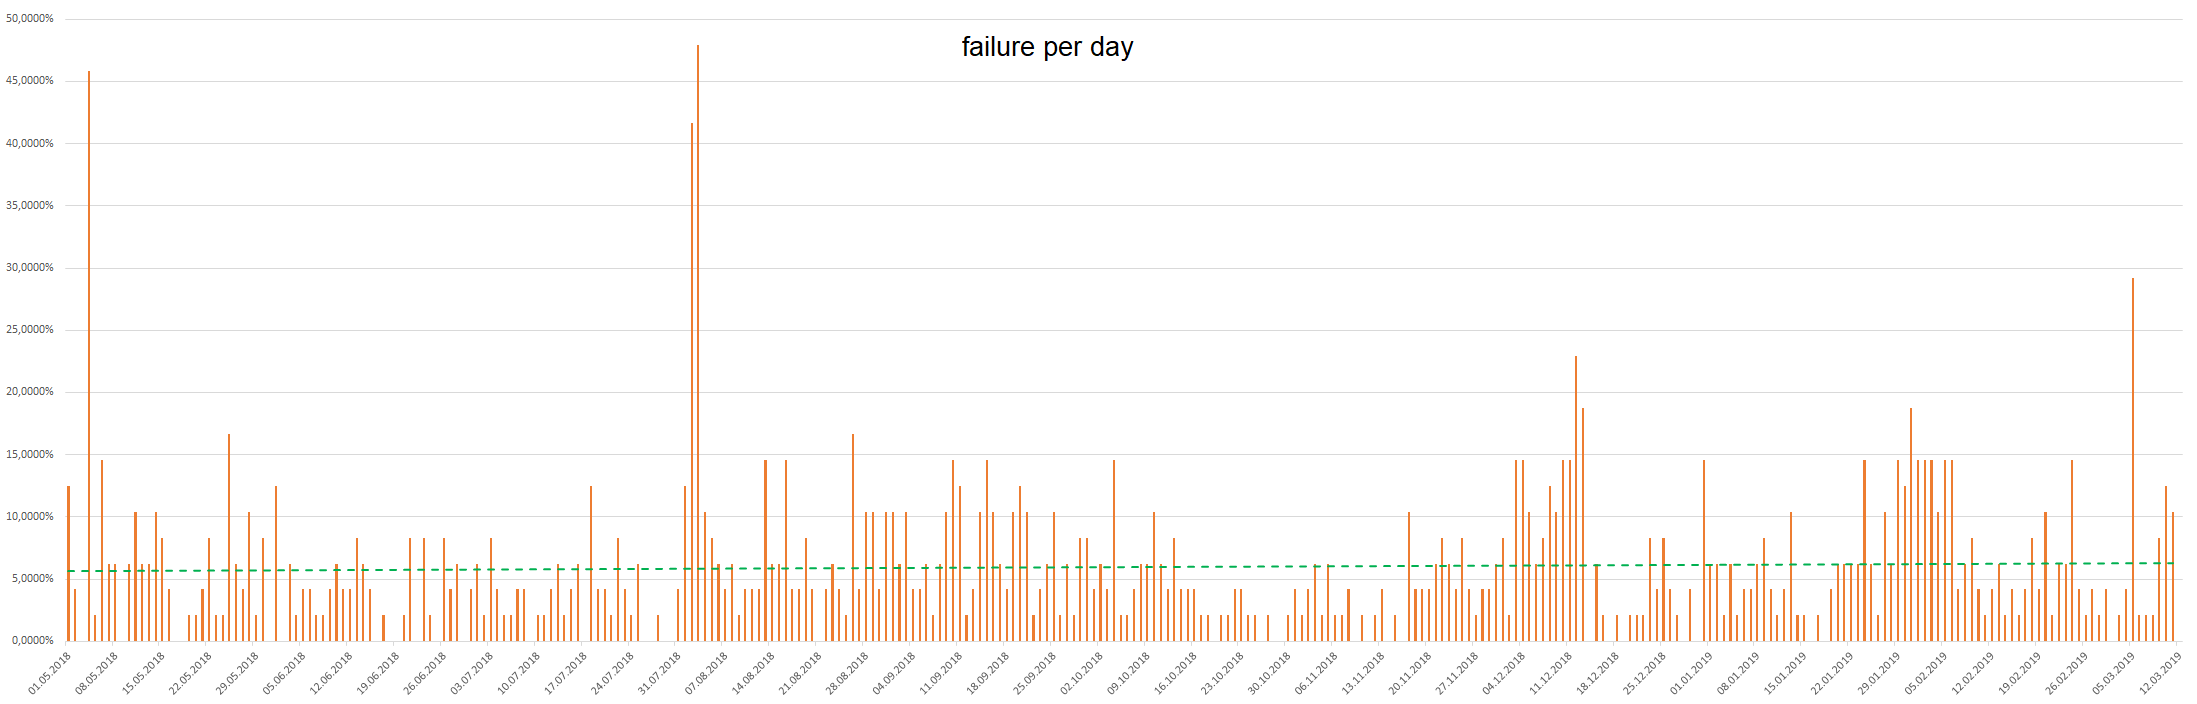 5_failure_per_day.png